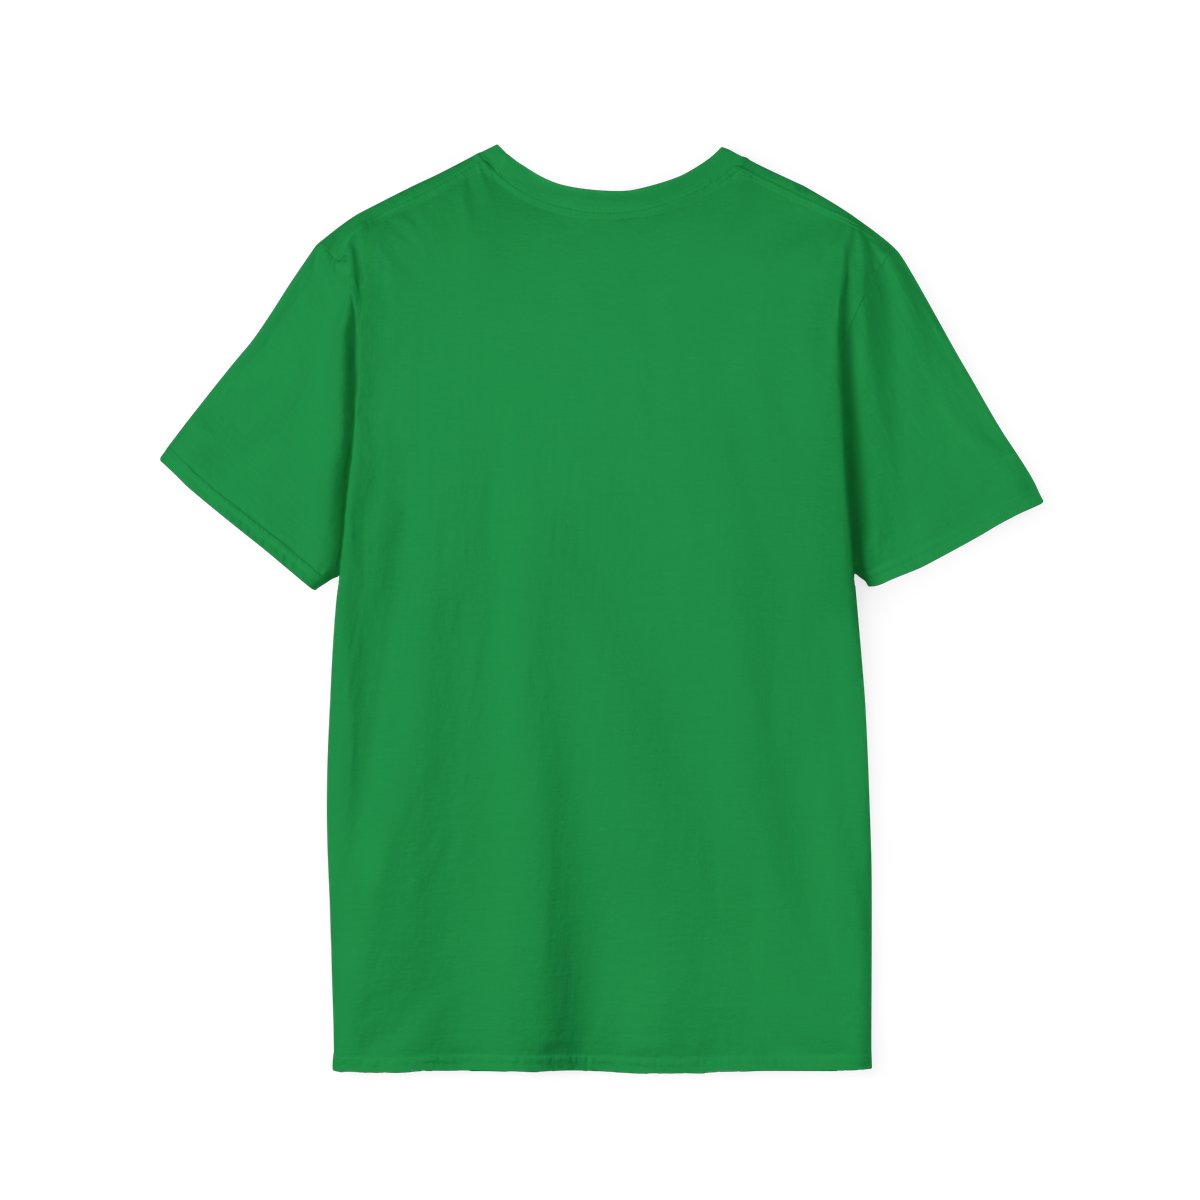 Happy St Patrick's Day, Wee Bit Irish Celebration Tee!  - T-Shirt product thumbnail image